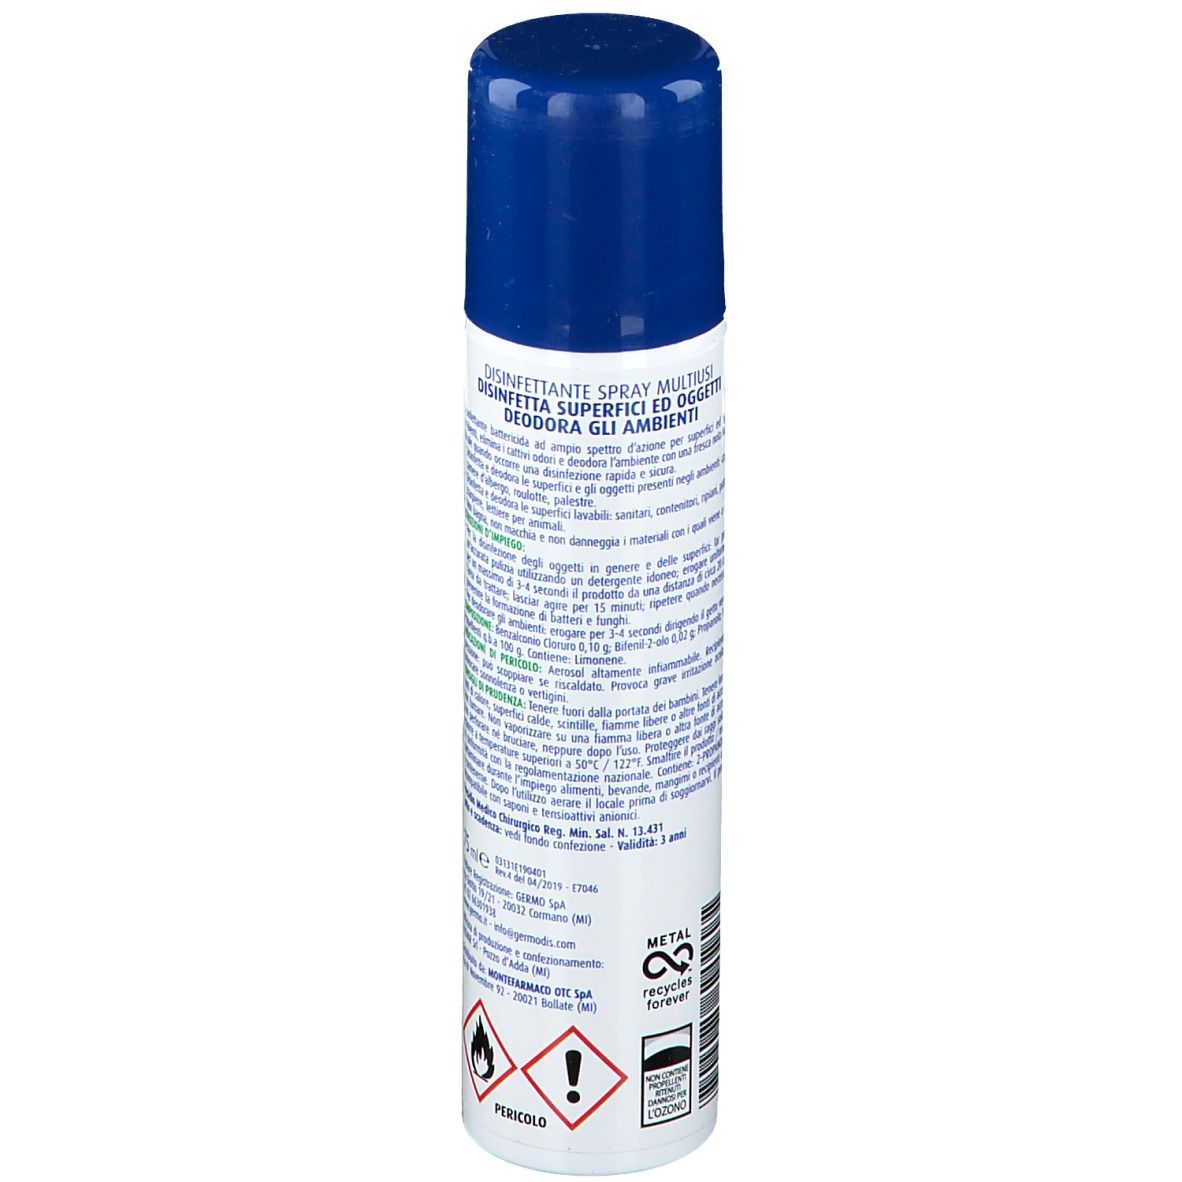 Pumilene Vapo® Disinfettante Spray​